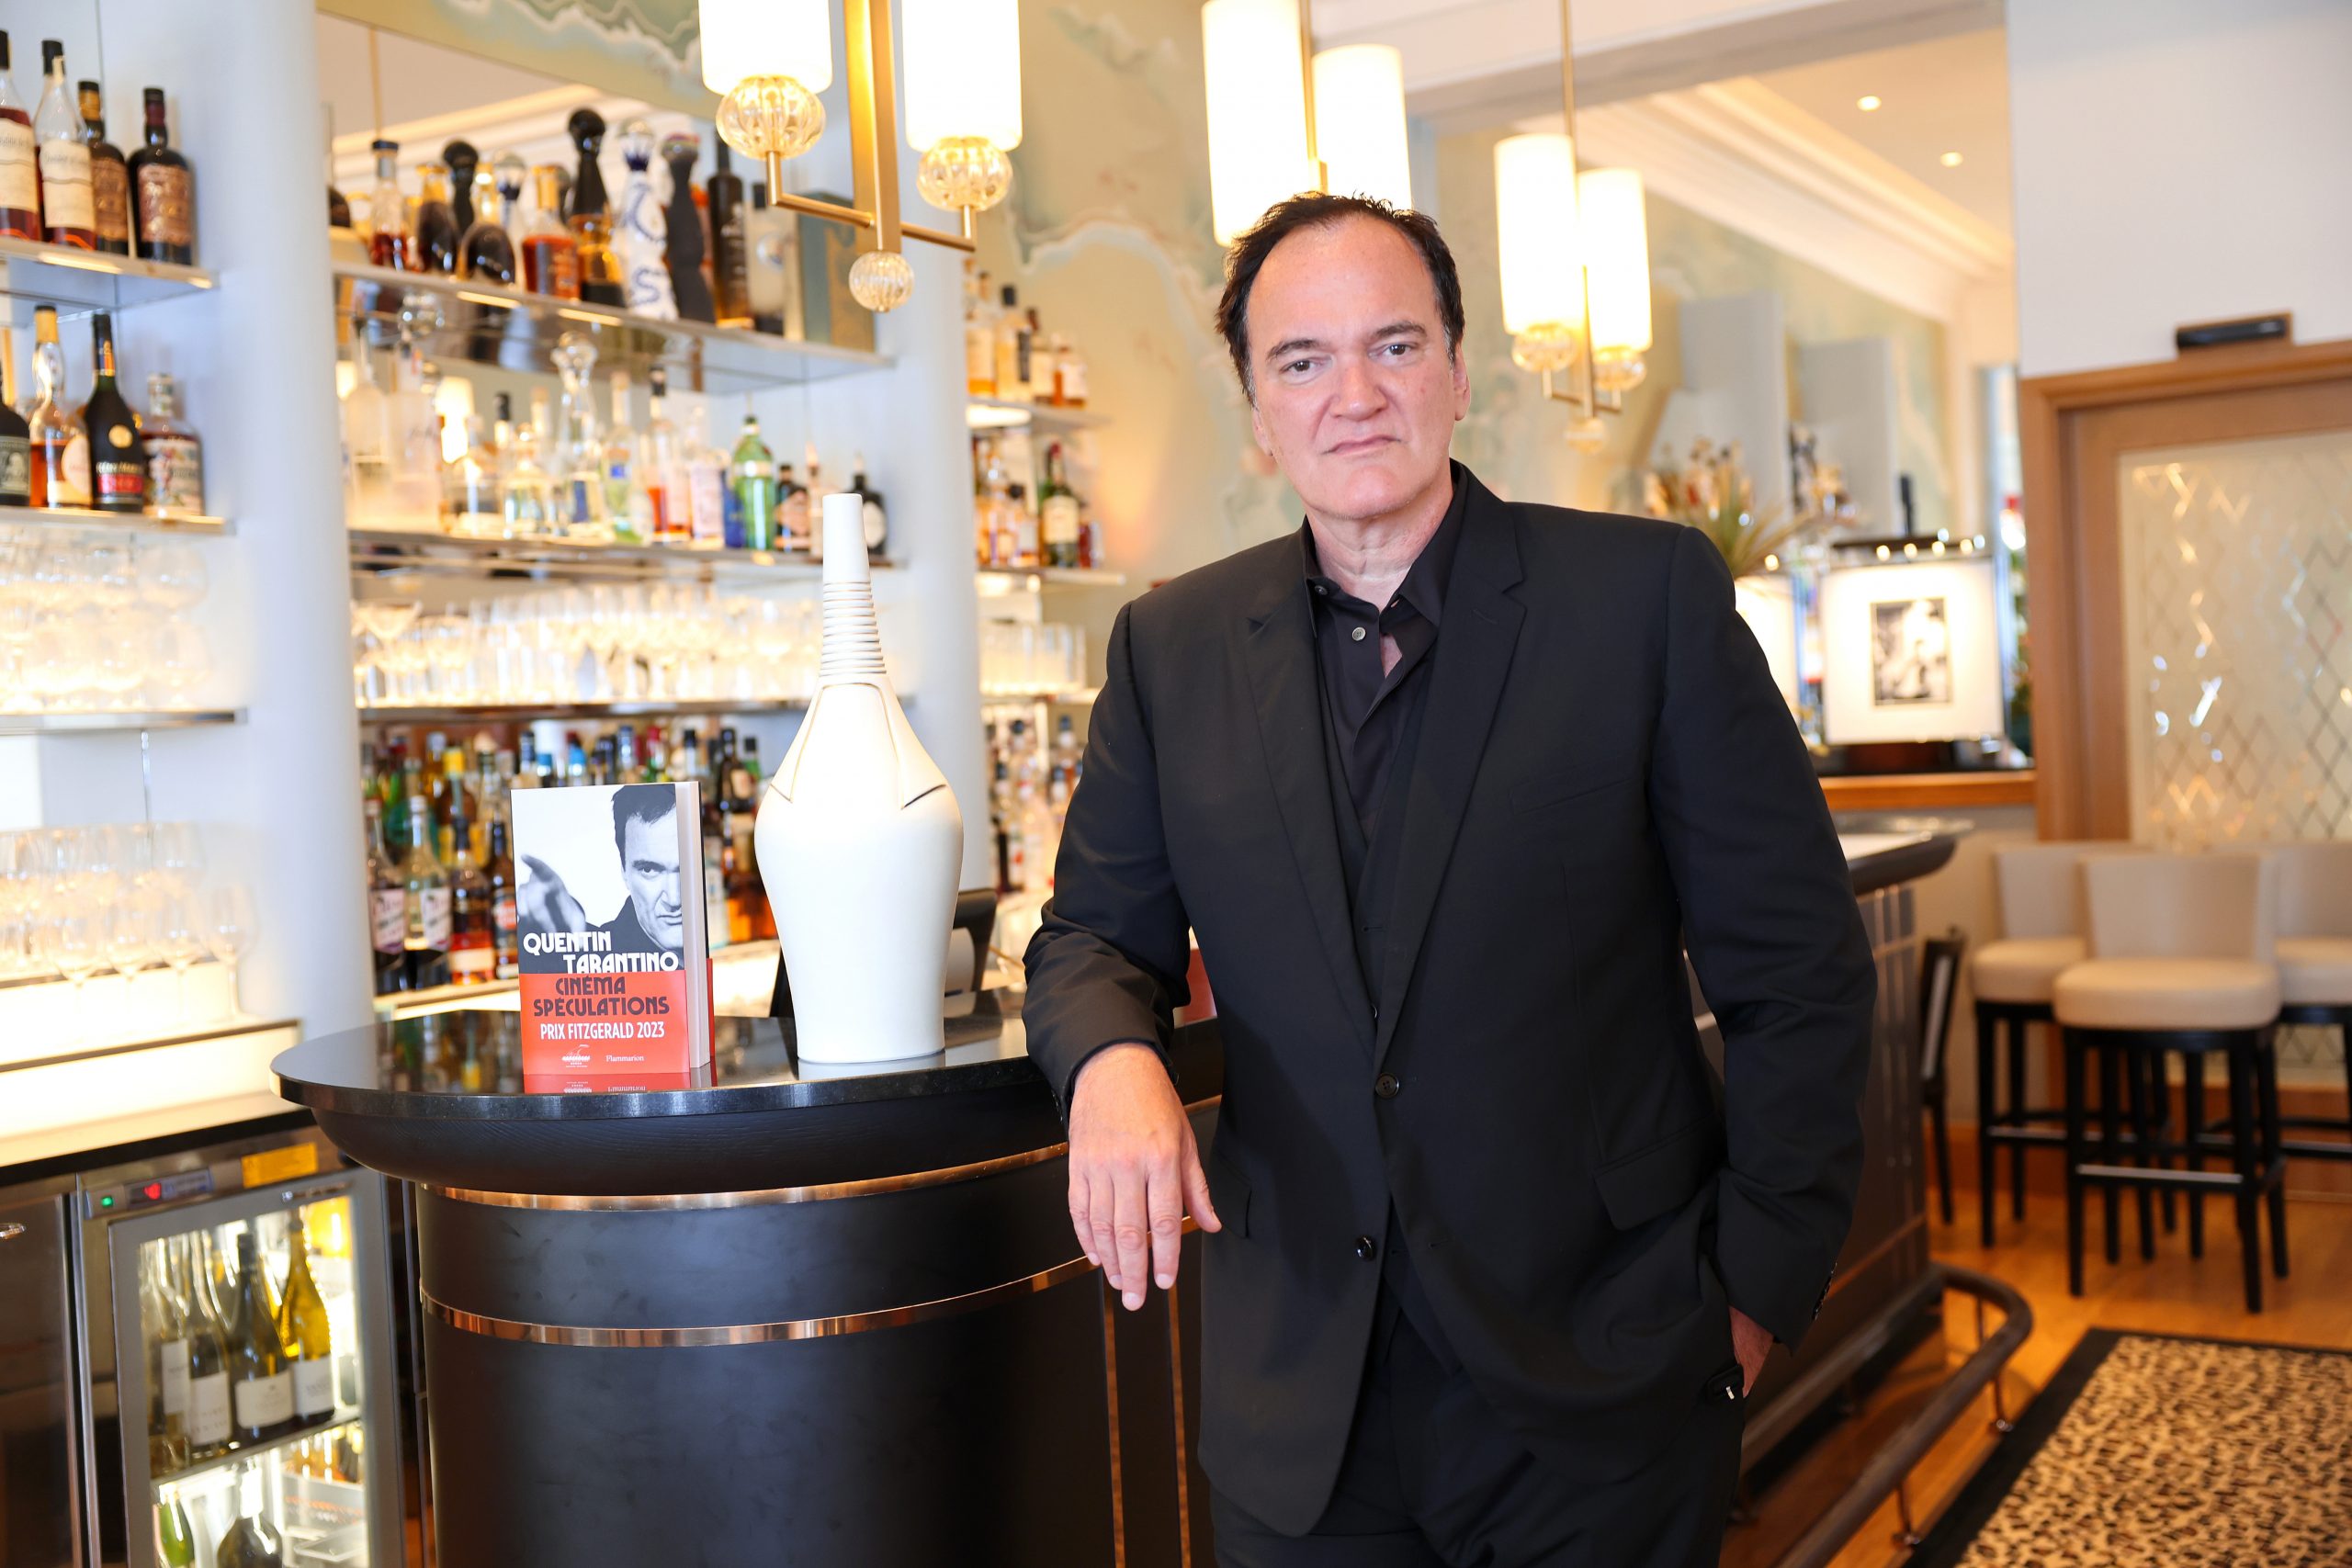 Quentin Tarantino photo